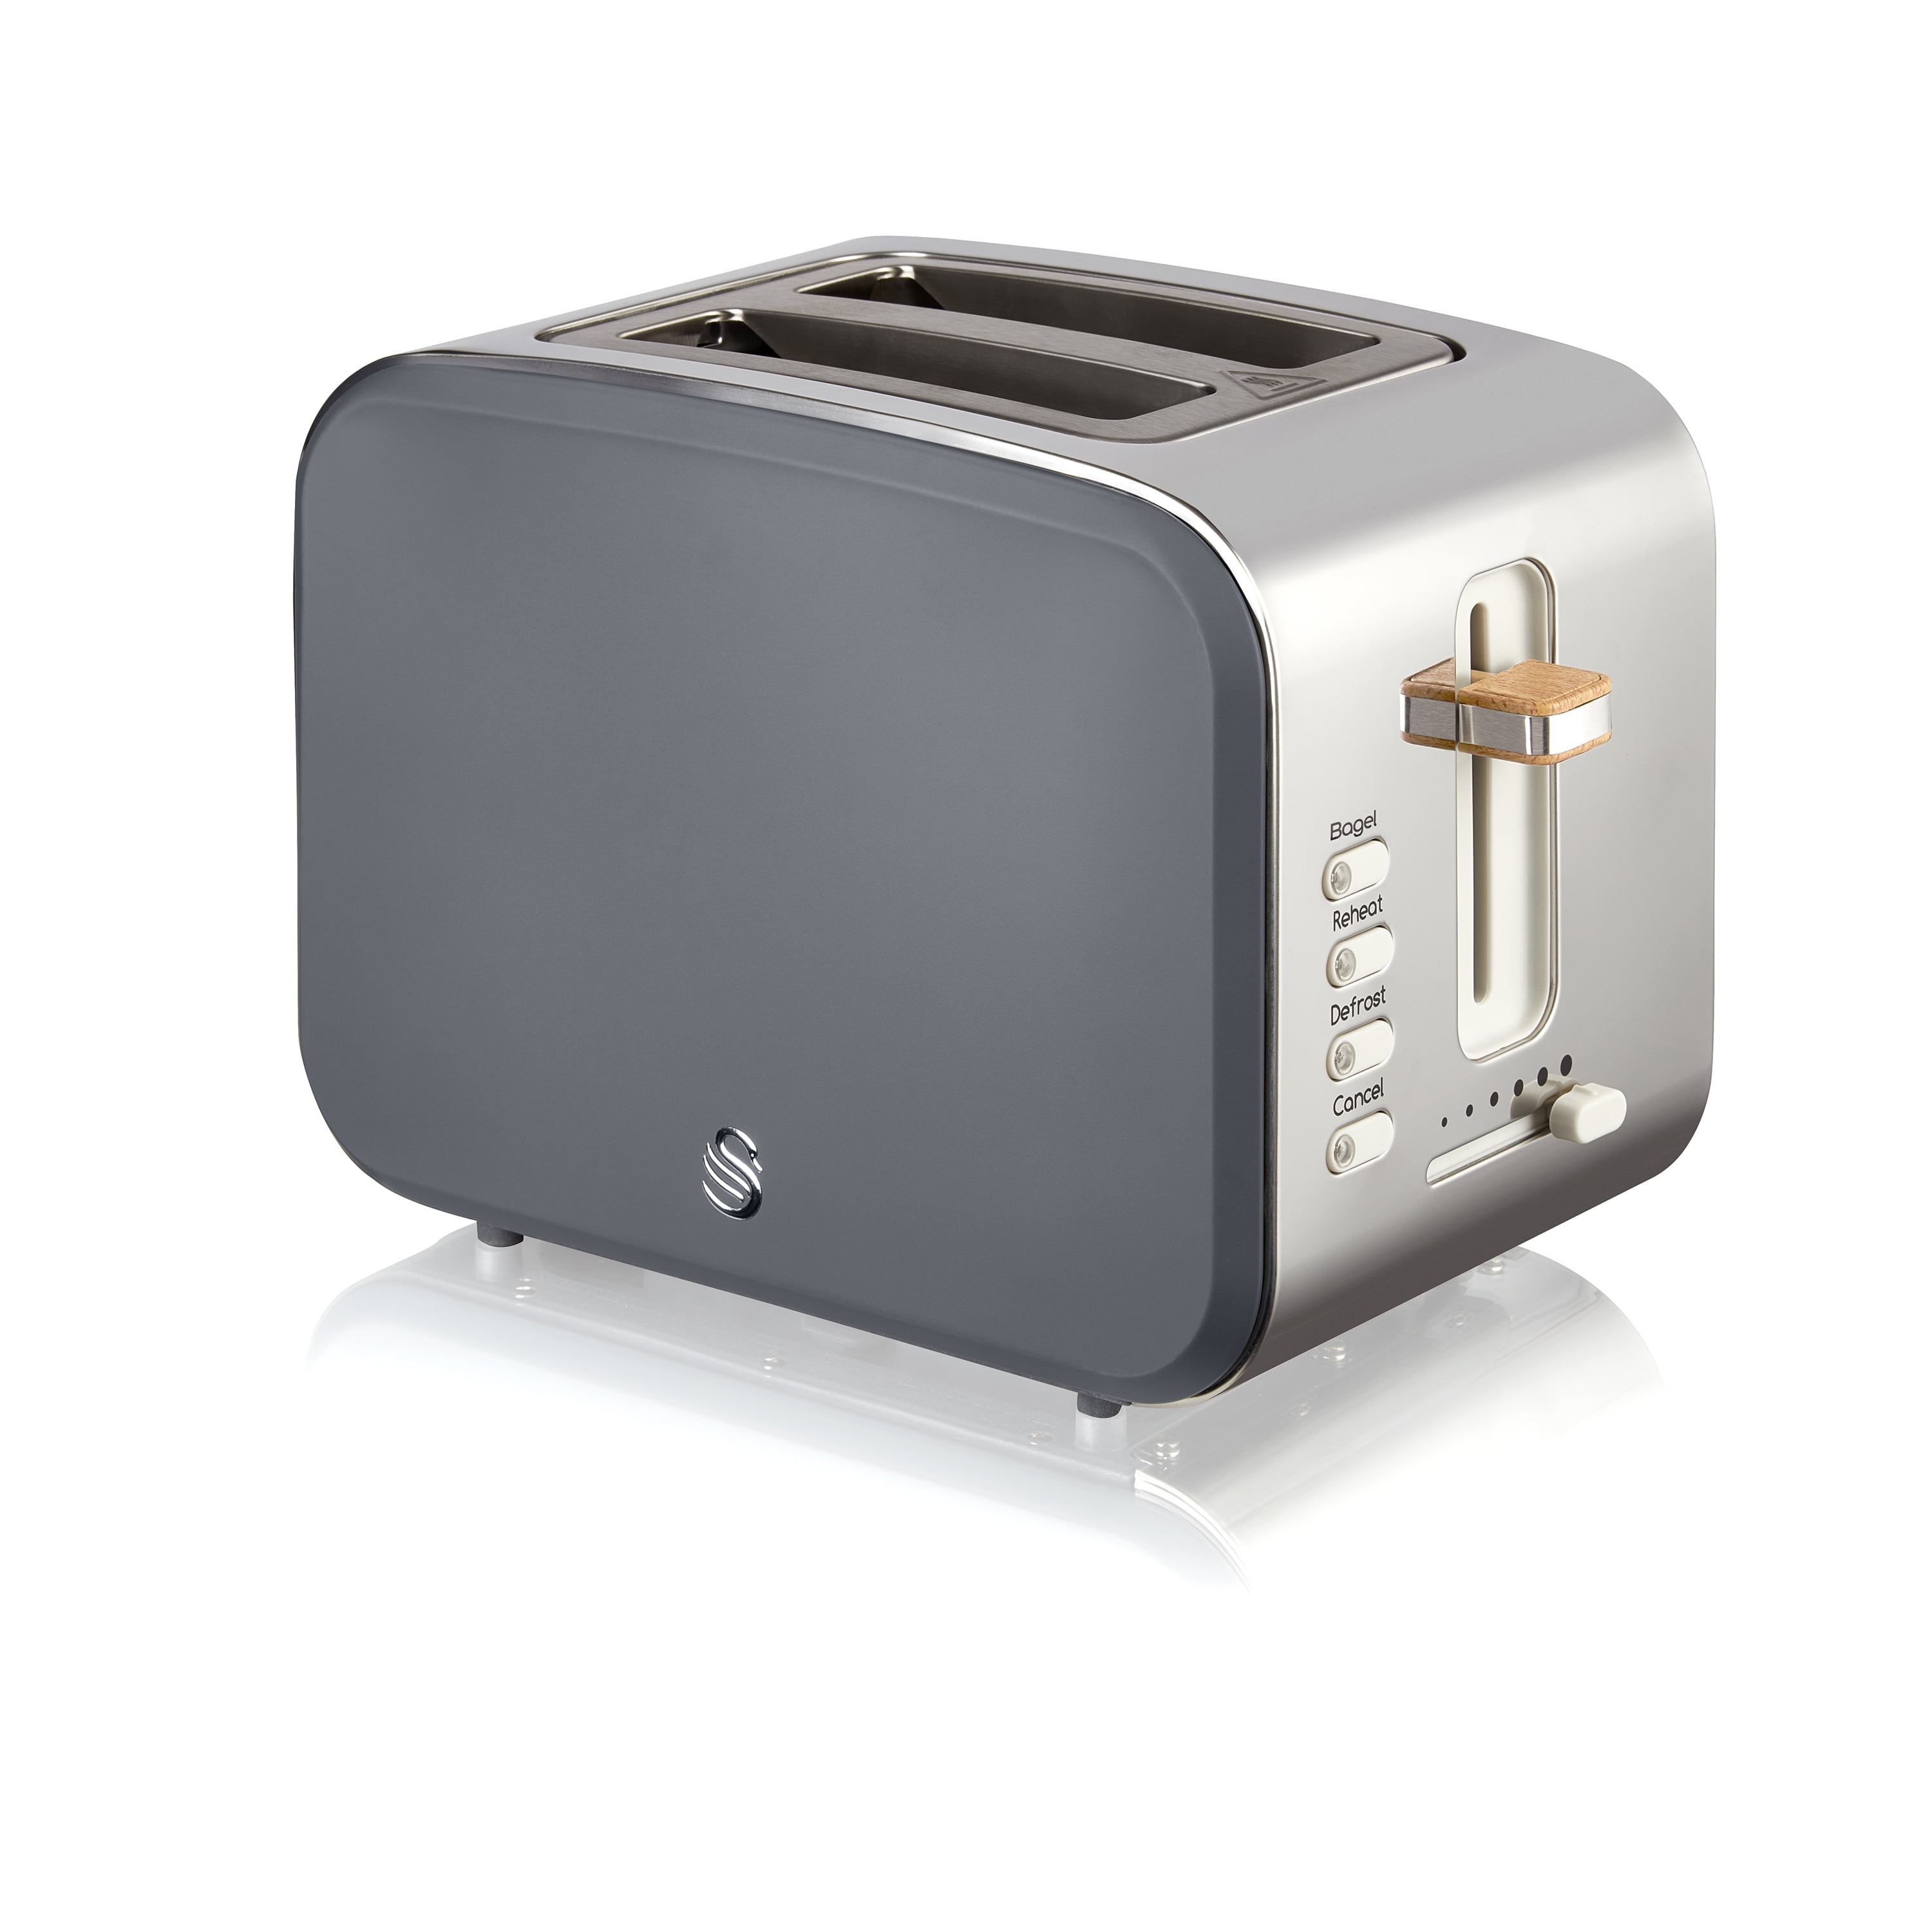 Saltonundefined Nordic Toaster 2 Slice, 3 Modes with 6 Power Settings, Slim  Scandinavian Design Runs on 900 Watts, Matte Cotton White - Bed Bath &  Beyond - 37523632